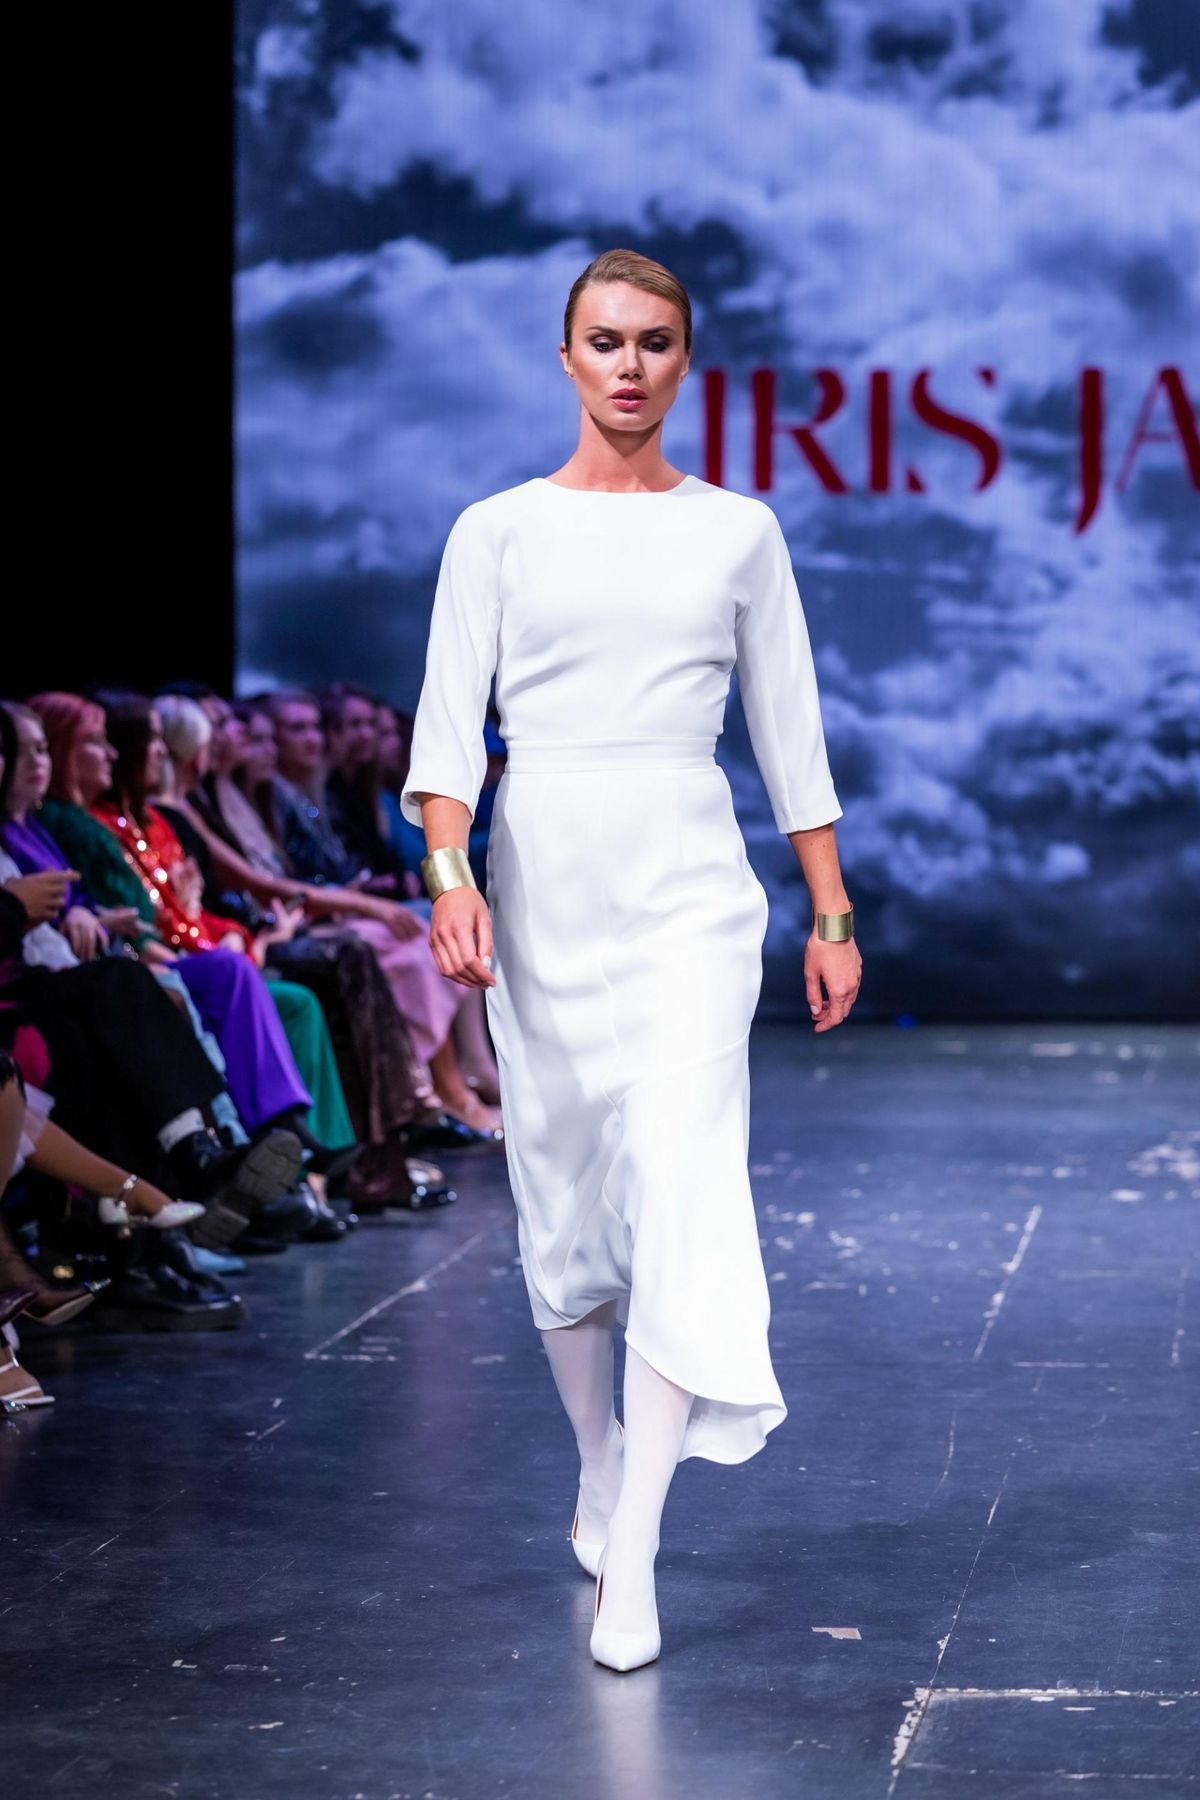 Iris Janvier, modellina laval Saskia Alusalu. FOTO: Erlend Štaub/tfw